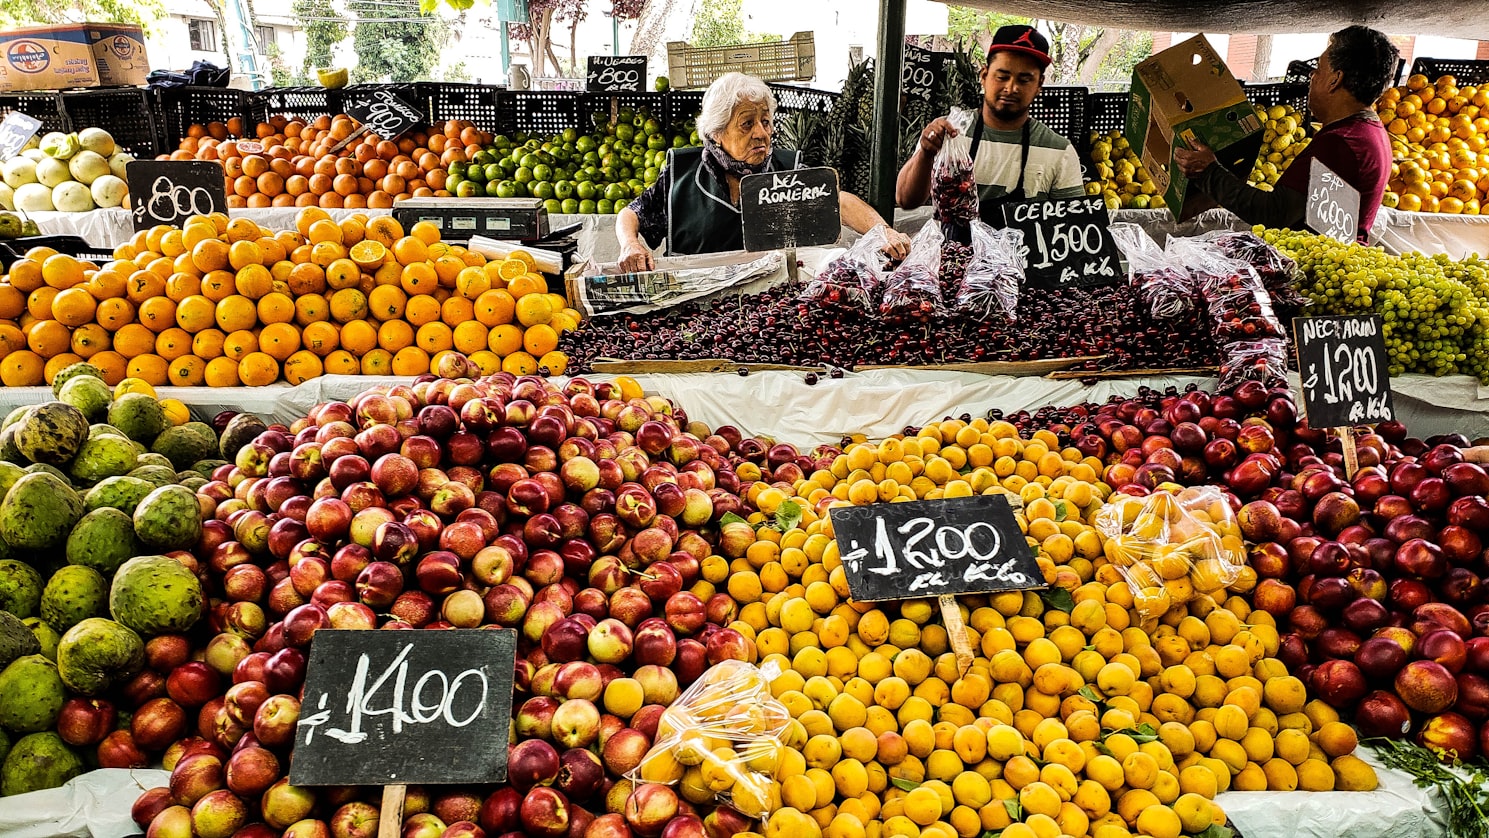 lots of fruit during daytime market